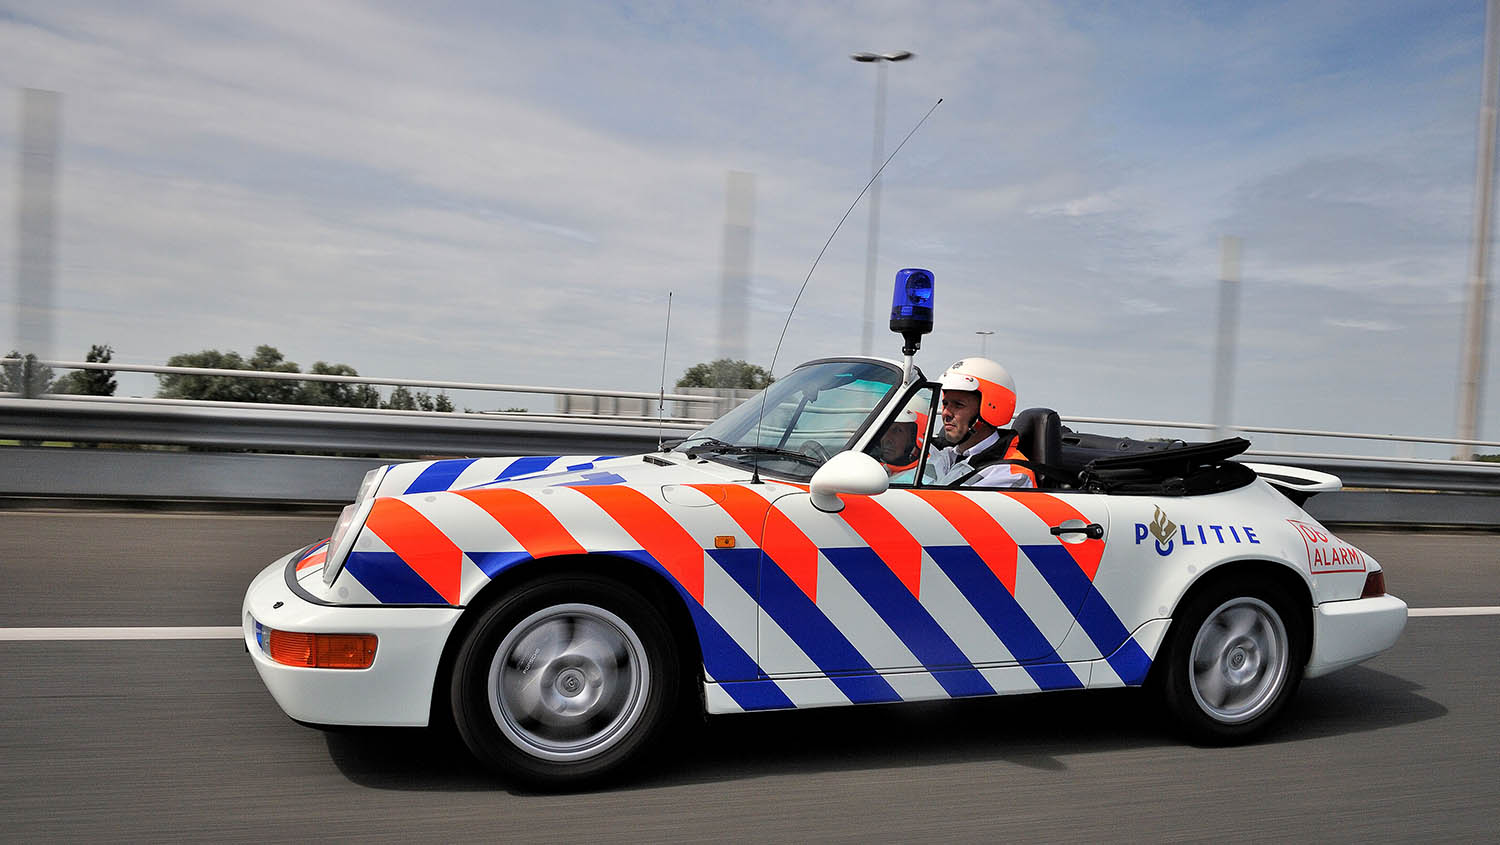 1209127_964_cabriolet_rijkspolitie_police_netherlands_2012_porsche_ag.jpg